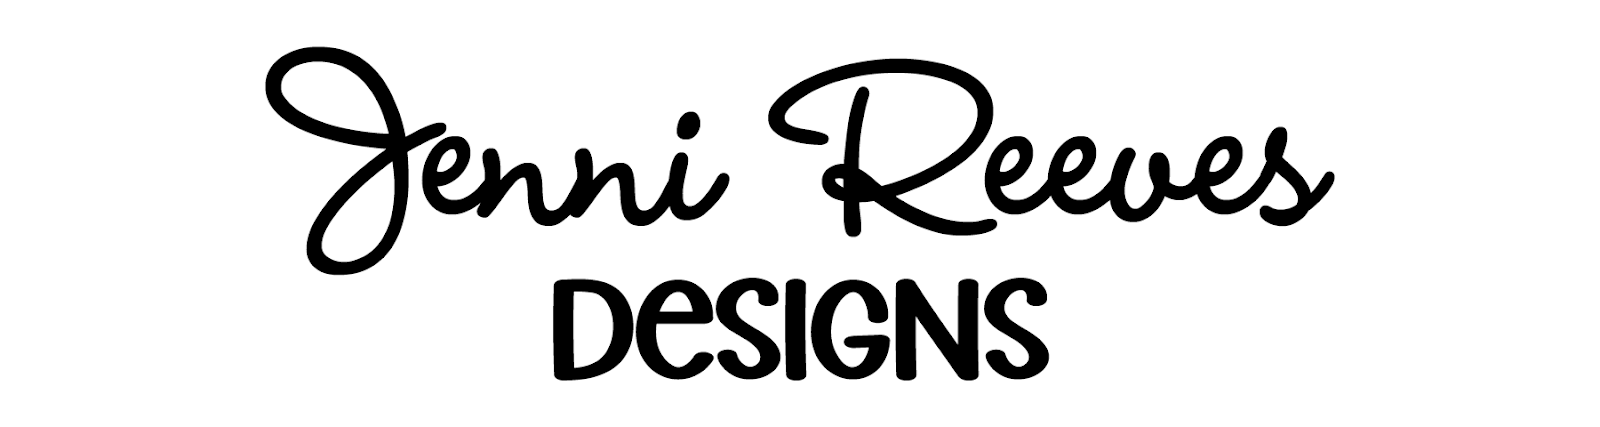 Jenni Reeves Designs™